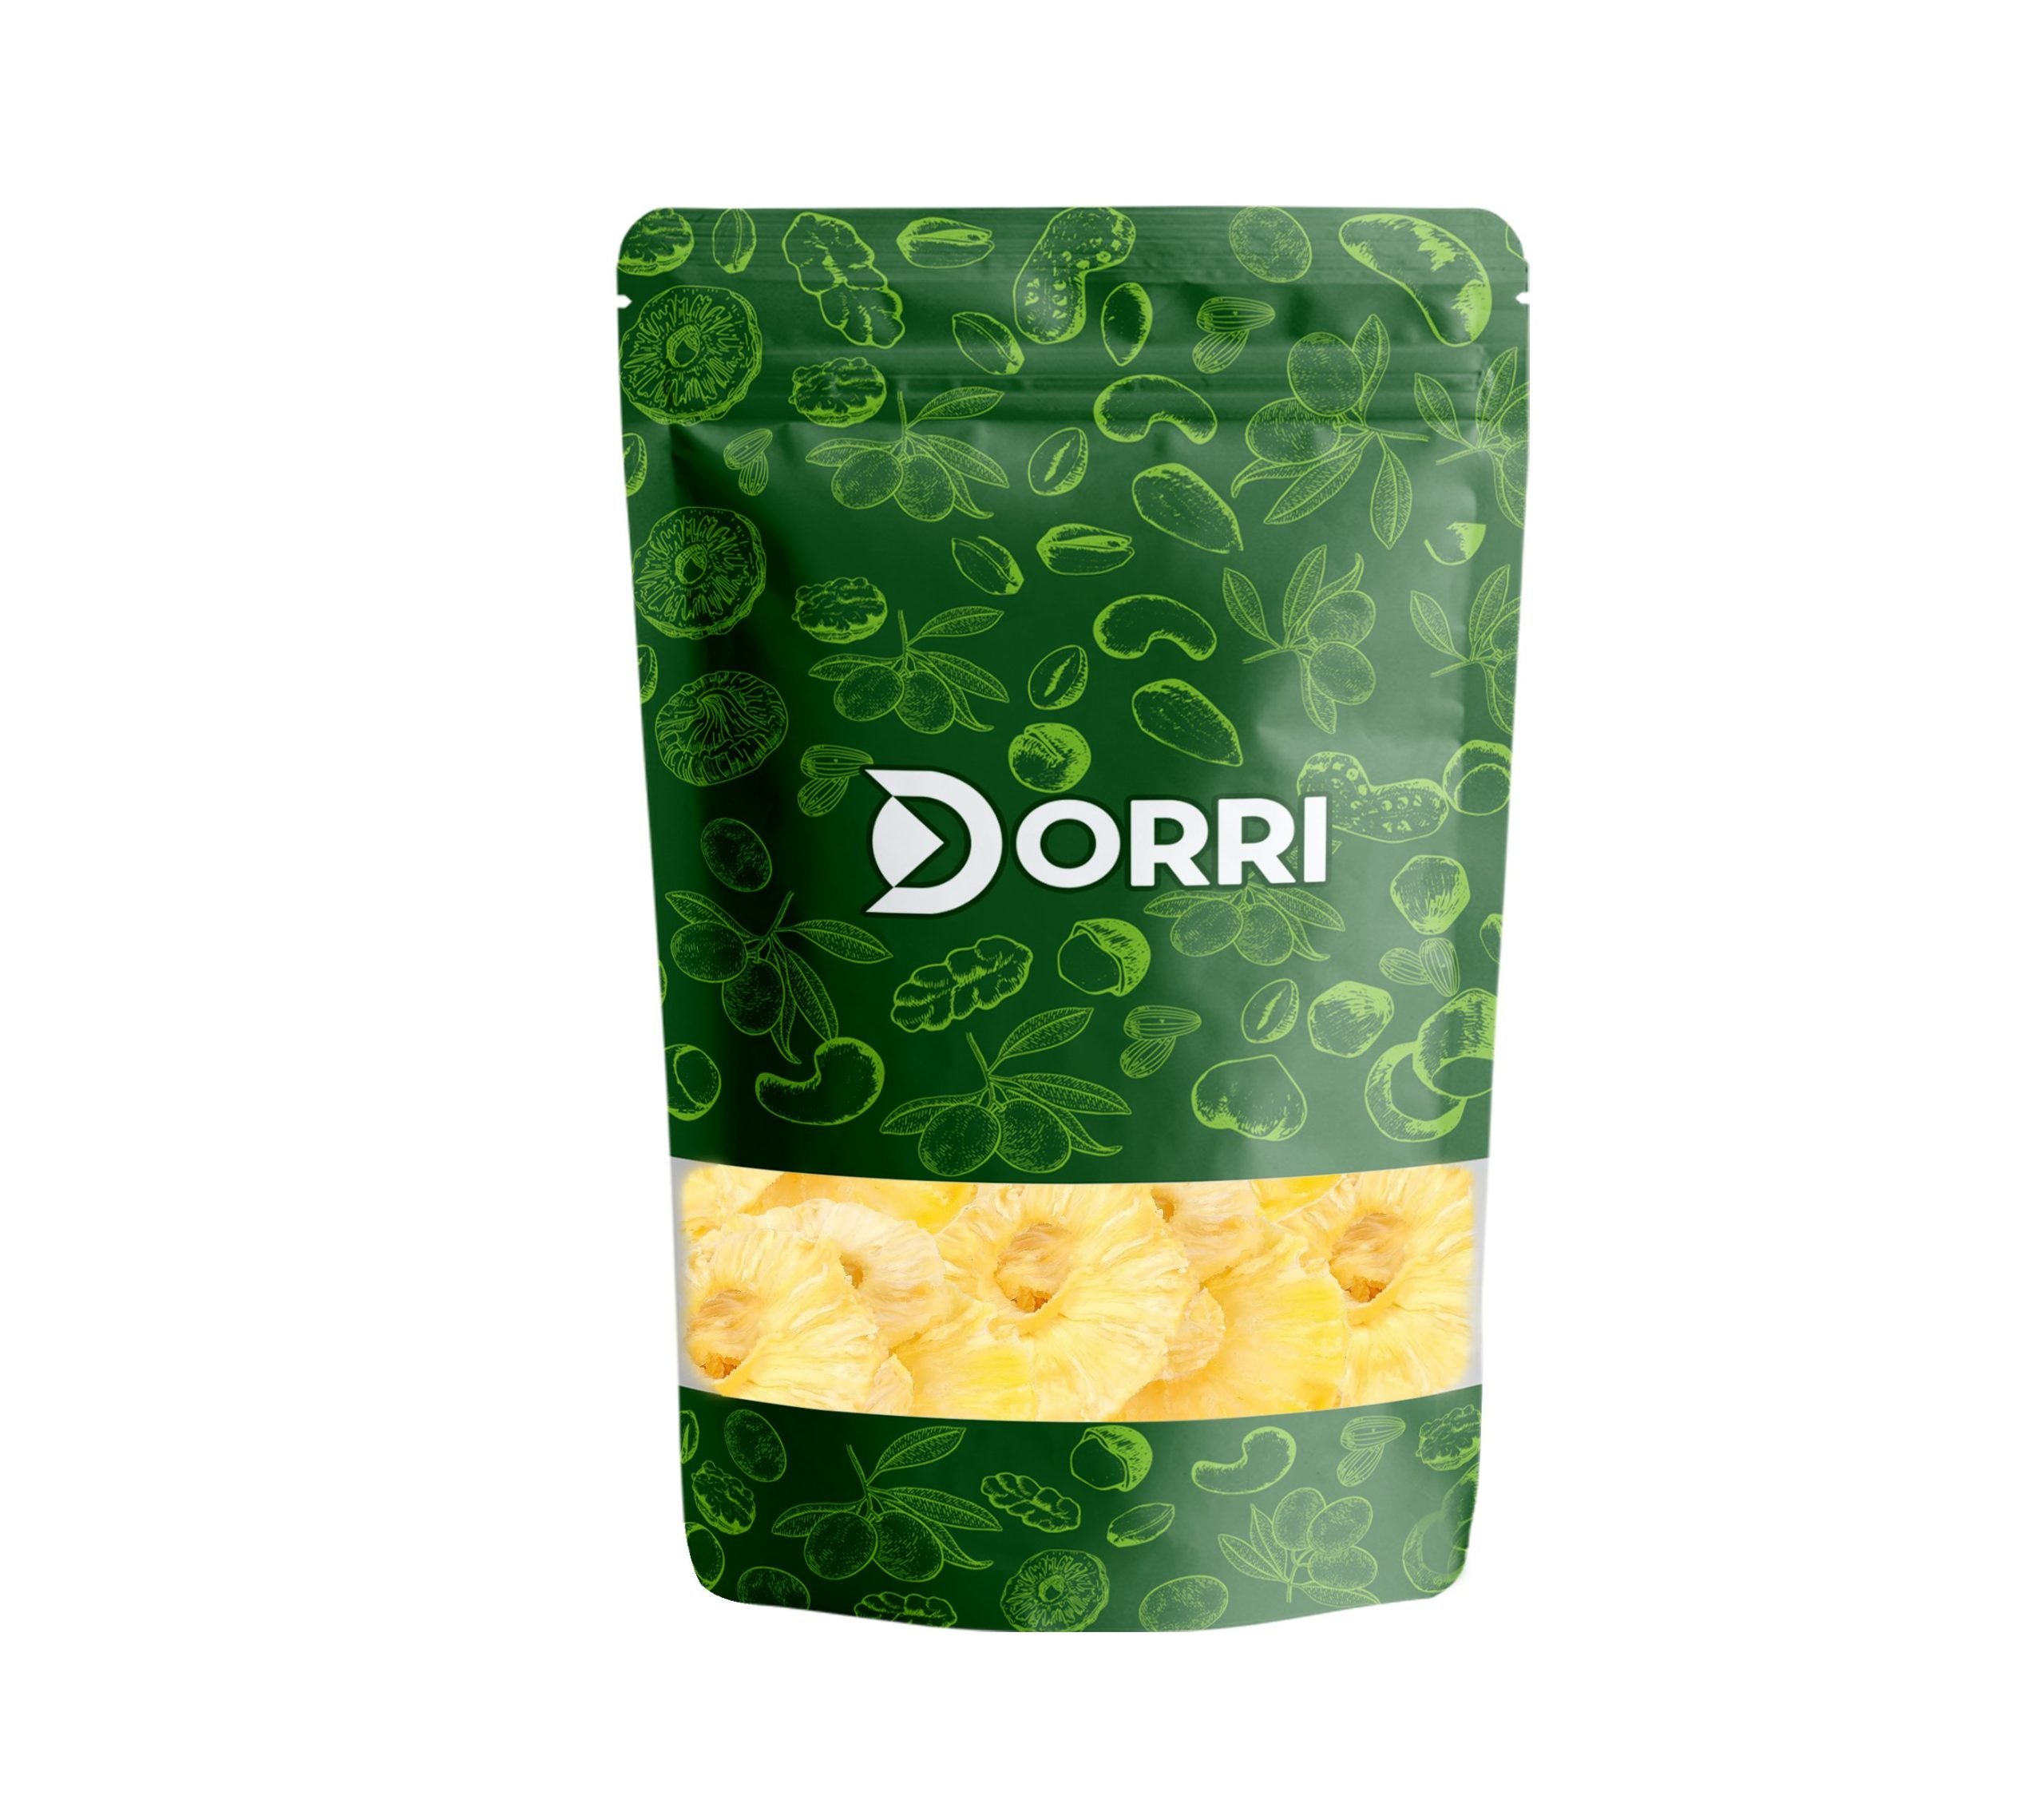 Dorri - Dried Pineapple Rings